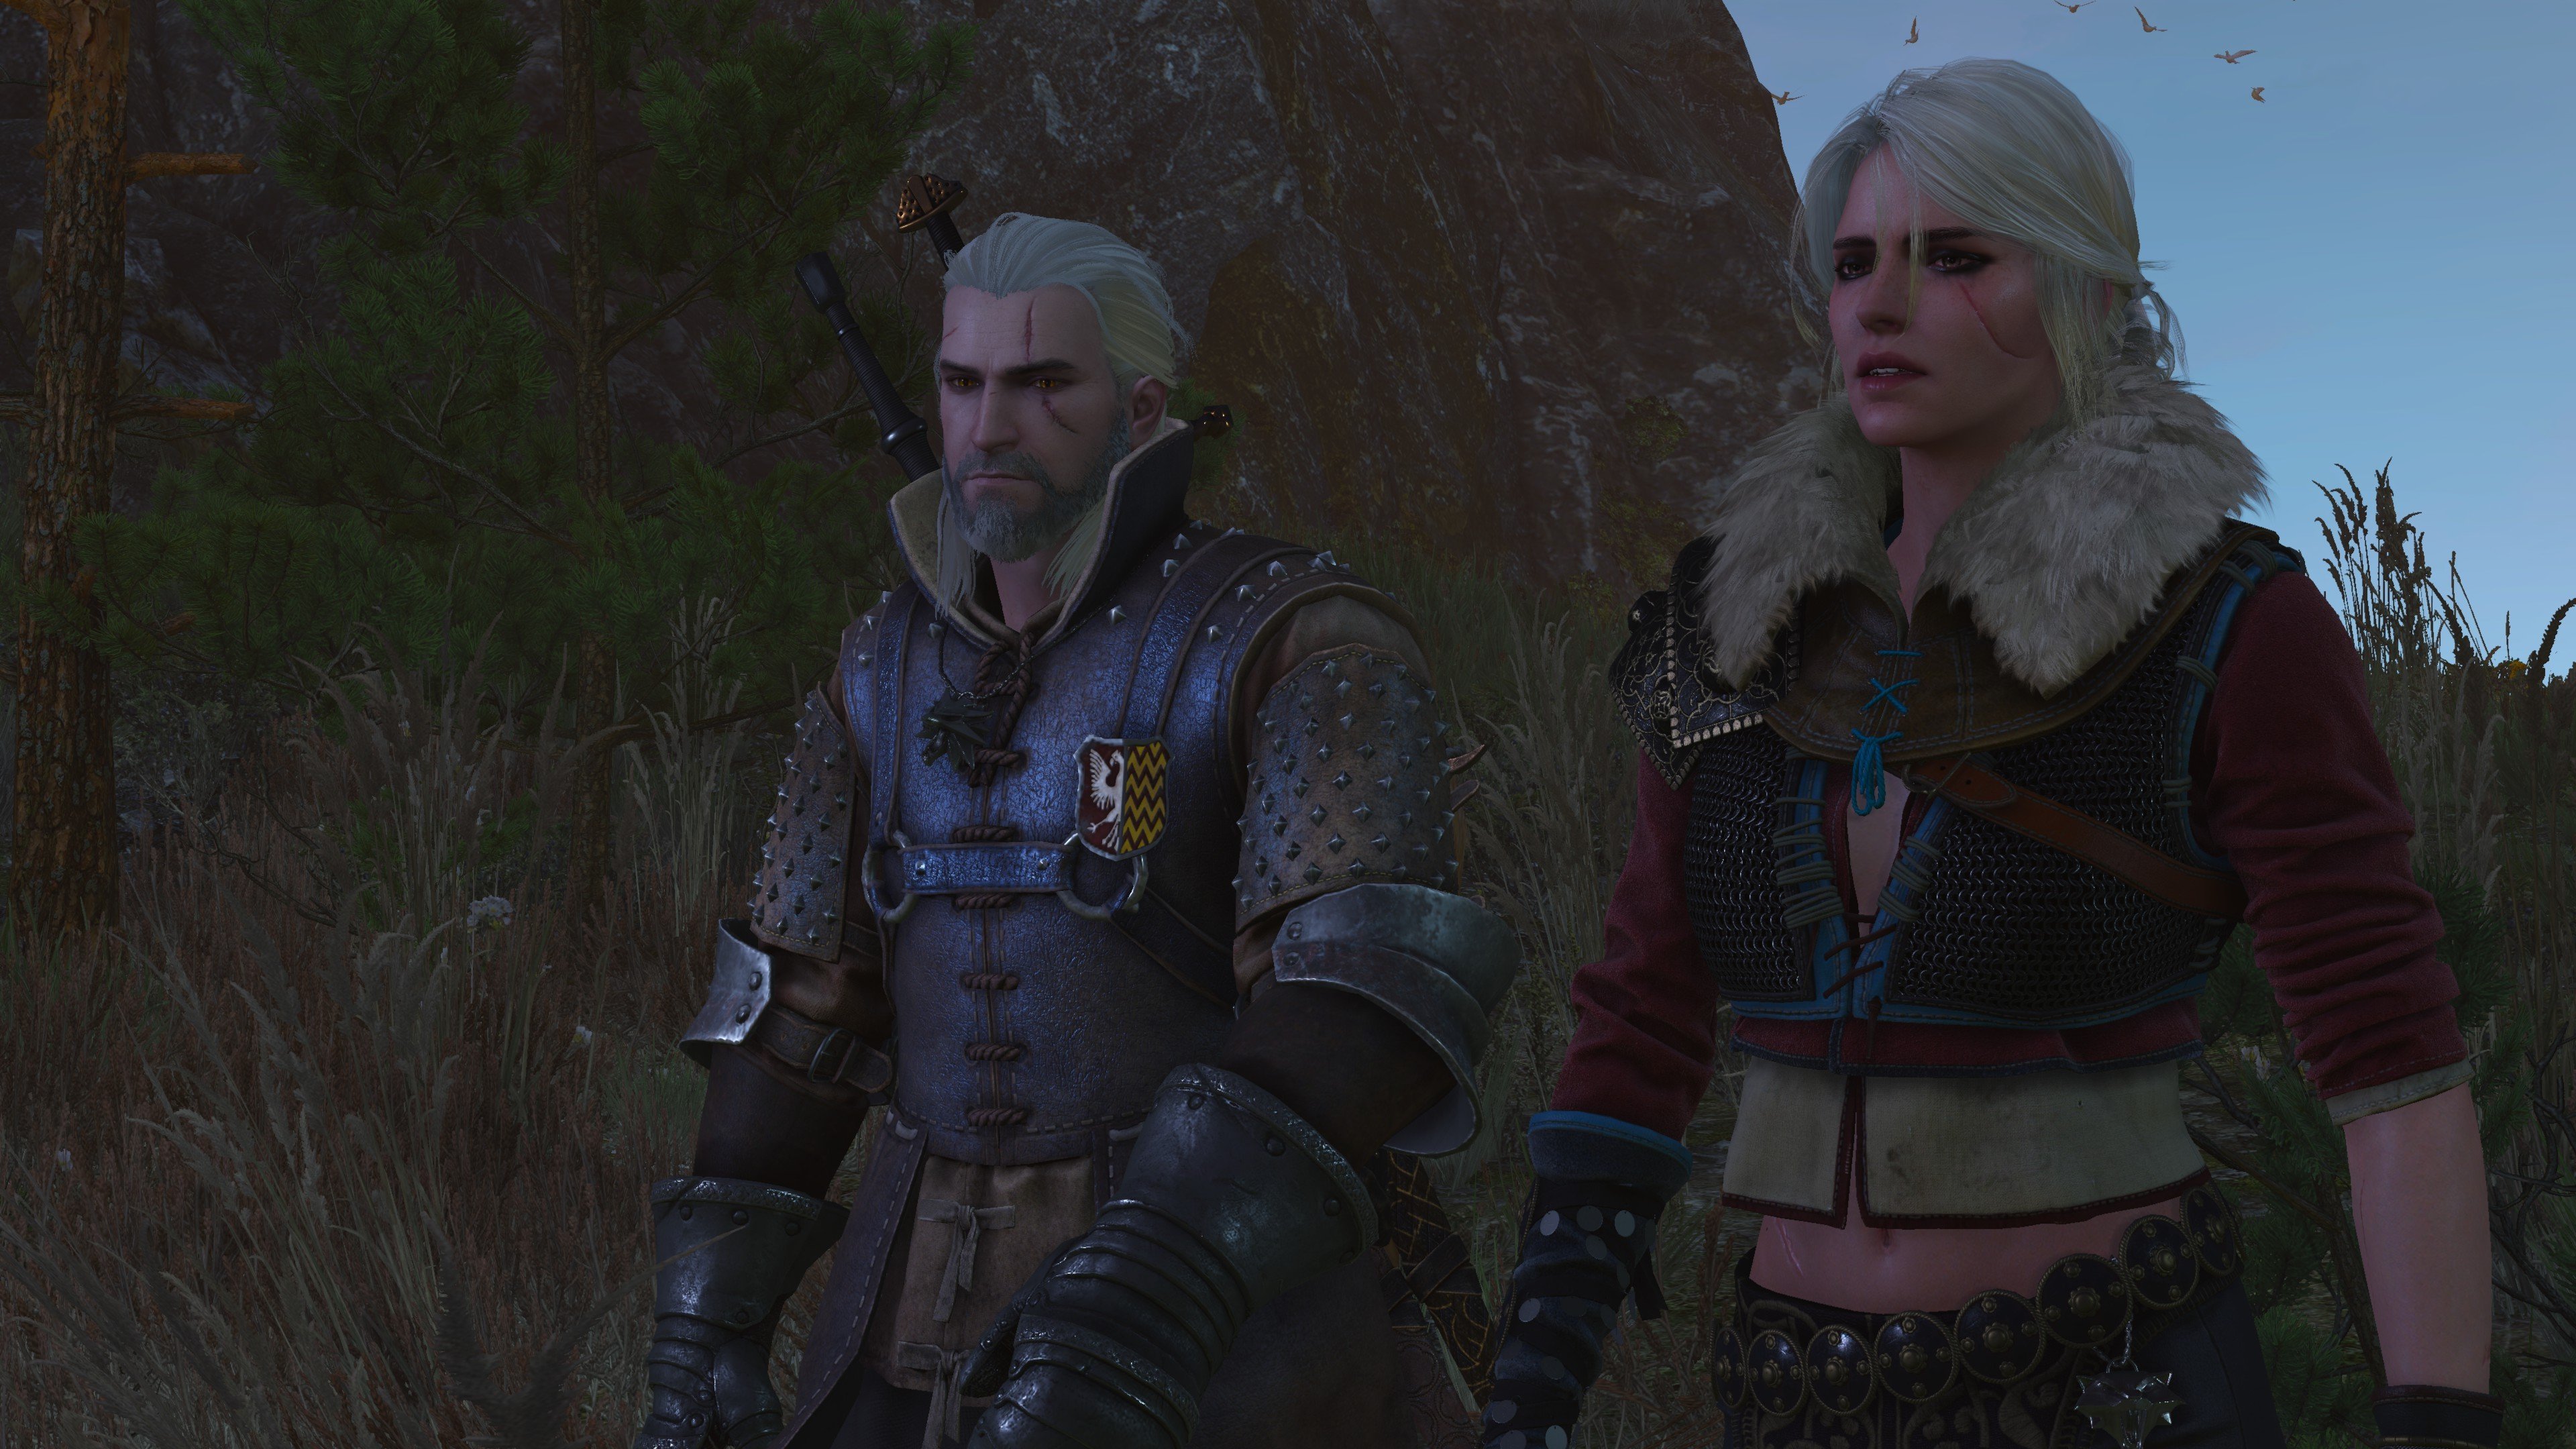 Geralt of Rivia, Cirilla Fiona Elen Riannon, The Witcher 3: Wild Hunt Wallpaper